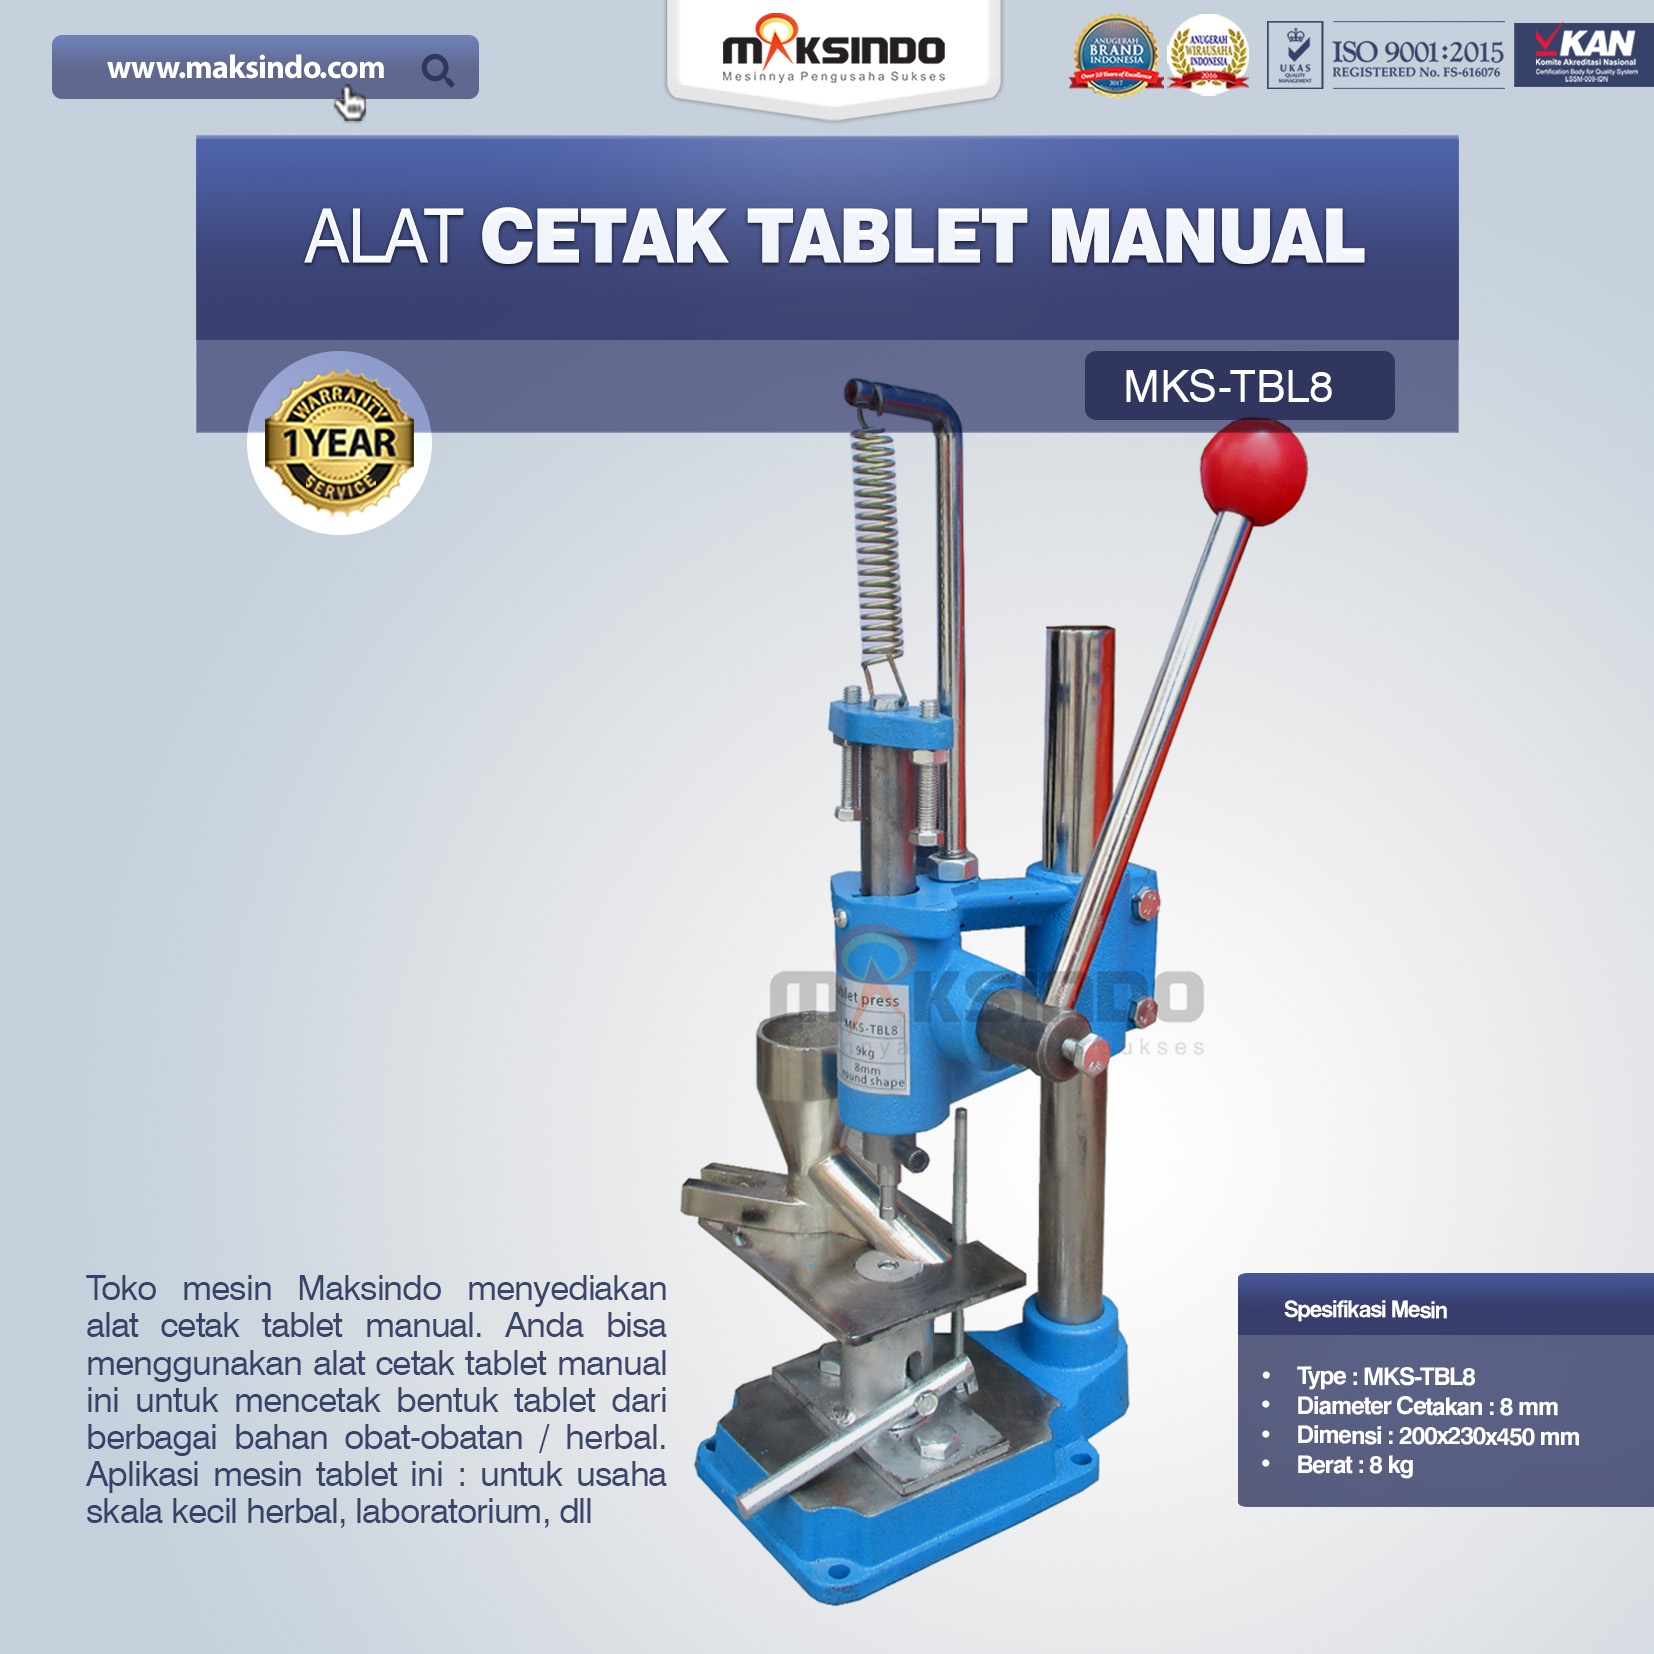 Jual Alat Cetak Tablet Manual MKS-TBL8 di Semarang